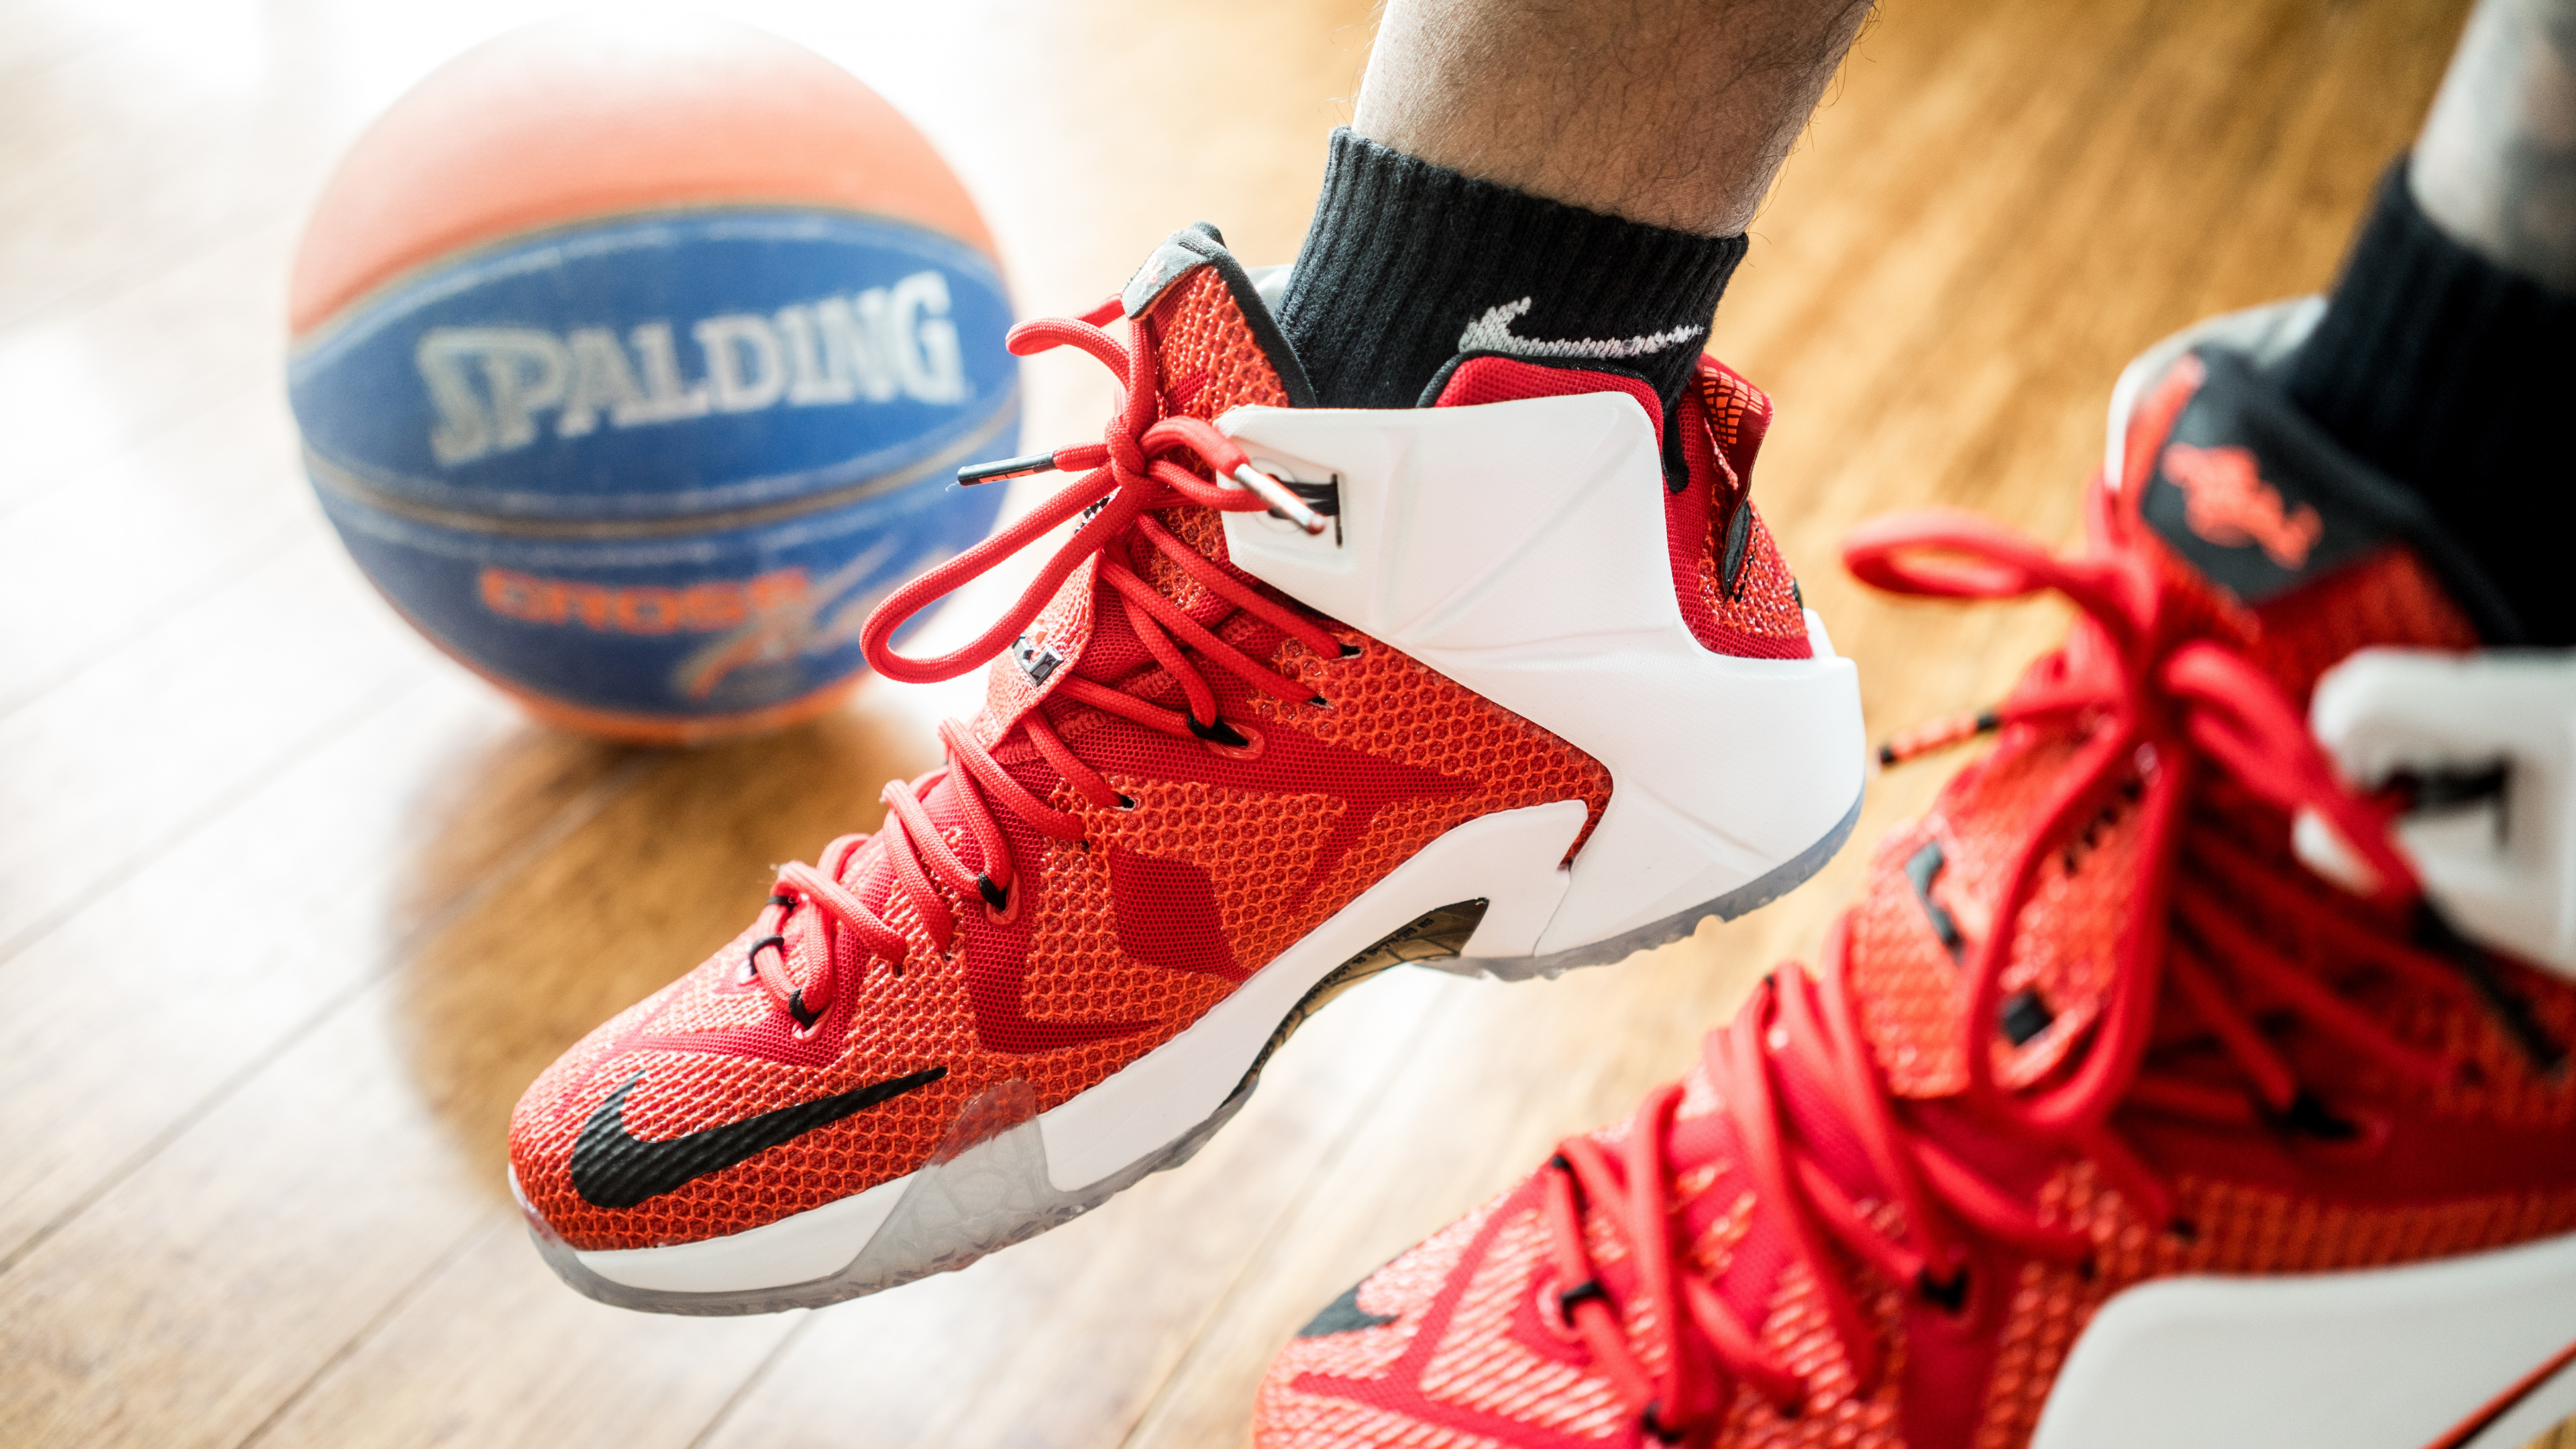 Personne Portant Des Chaussures de Basket-ball Nike Rouges. Wallpaper in 3840x2160 Resolution